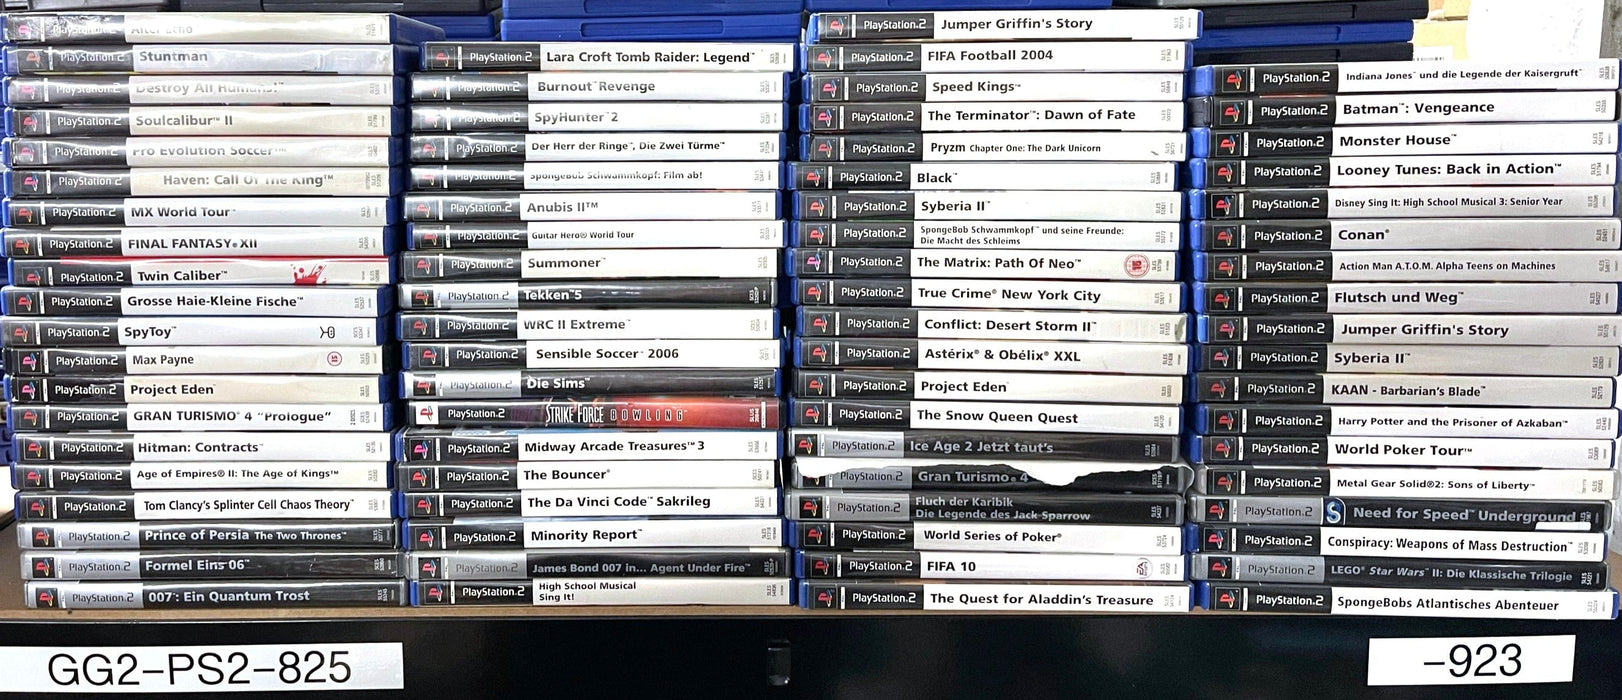 Glaciergames PlayStation 2 Game Primal PlayStation 2 (Nr.1122)